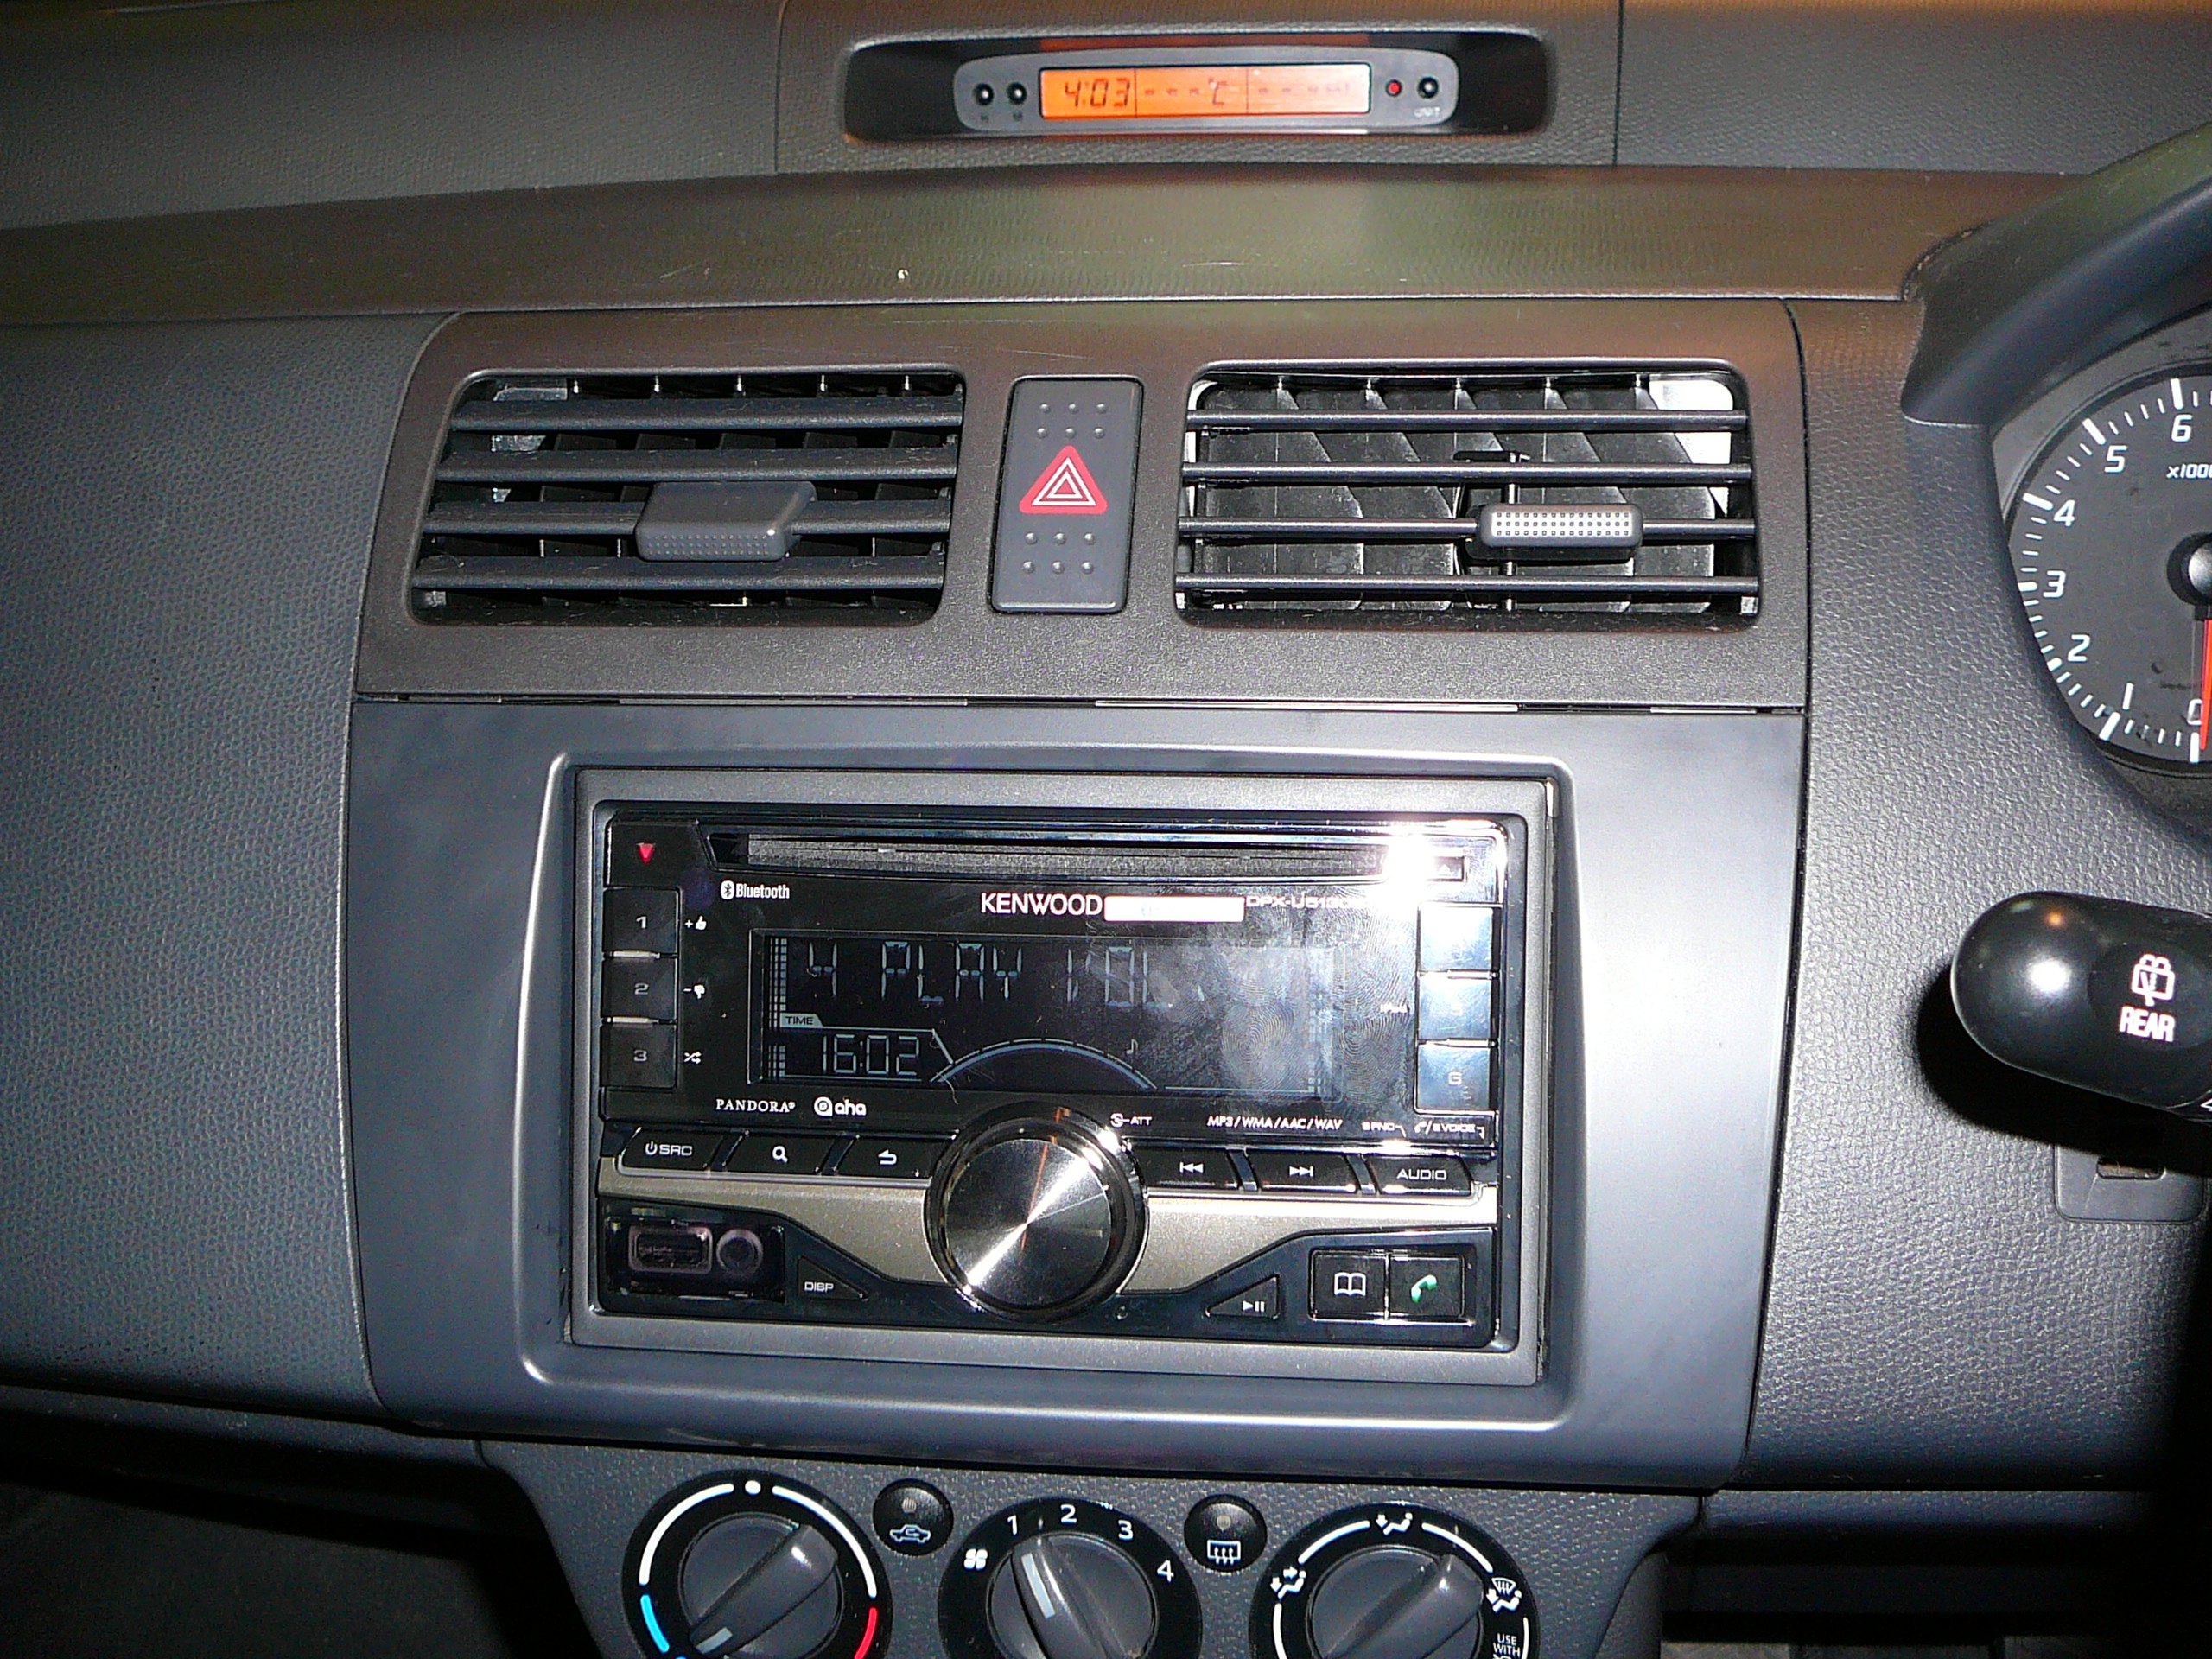 Suzuki Swift 2005 – Kenwood Cd Radio, USB, Ipod, AM FM Radio